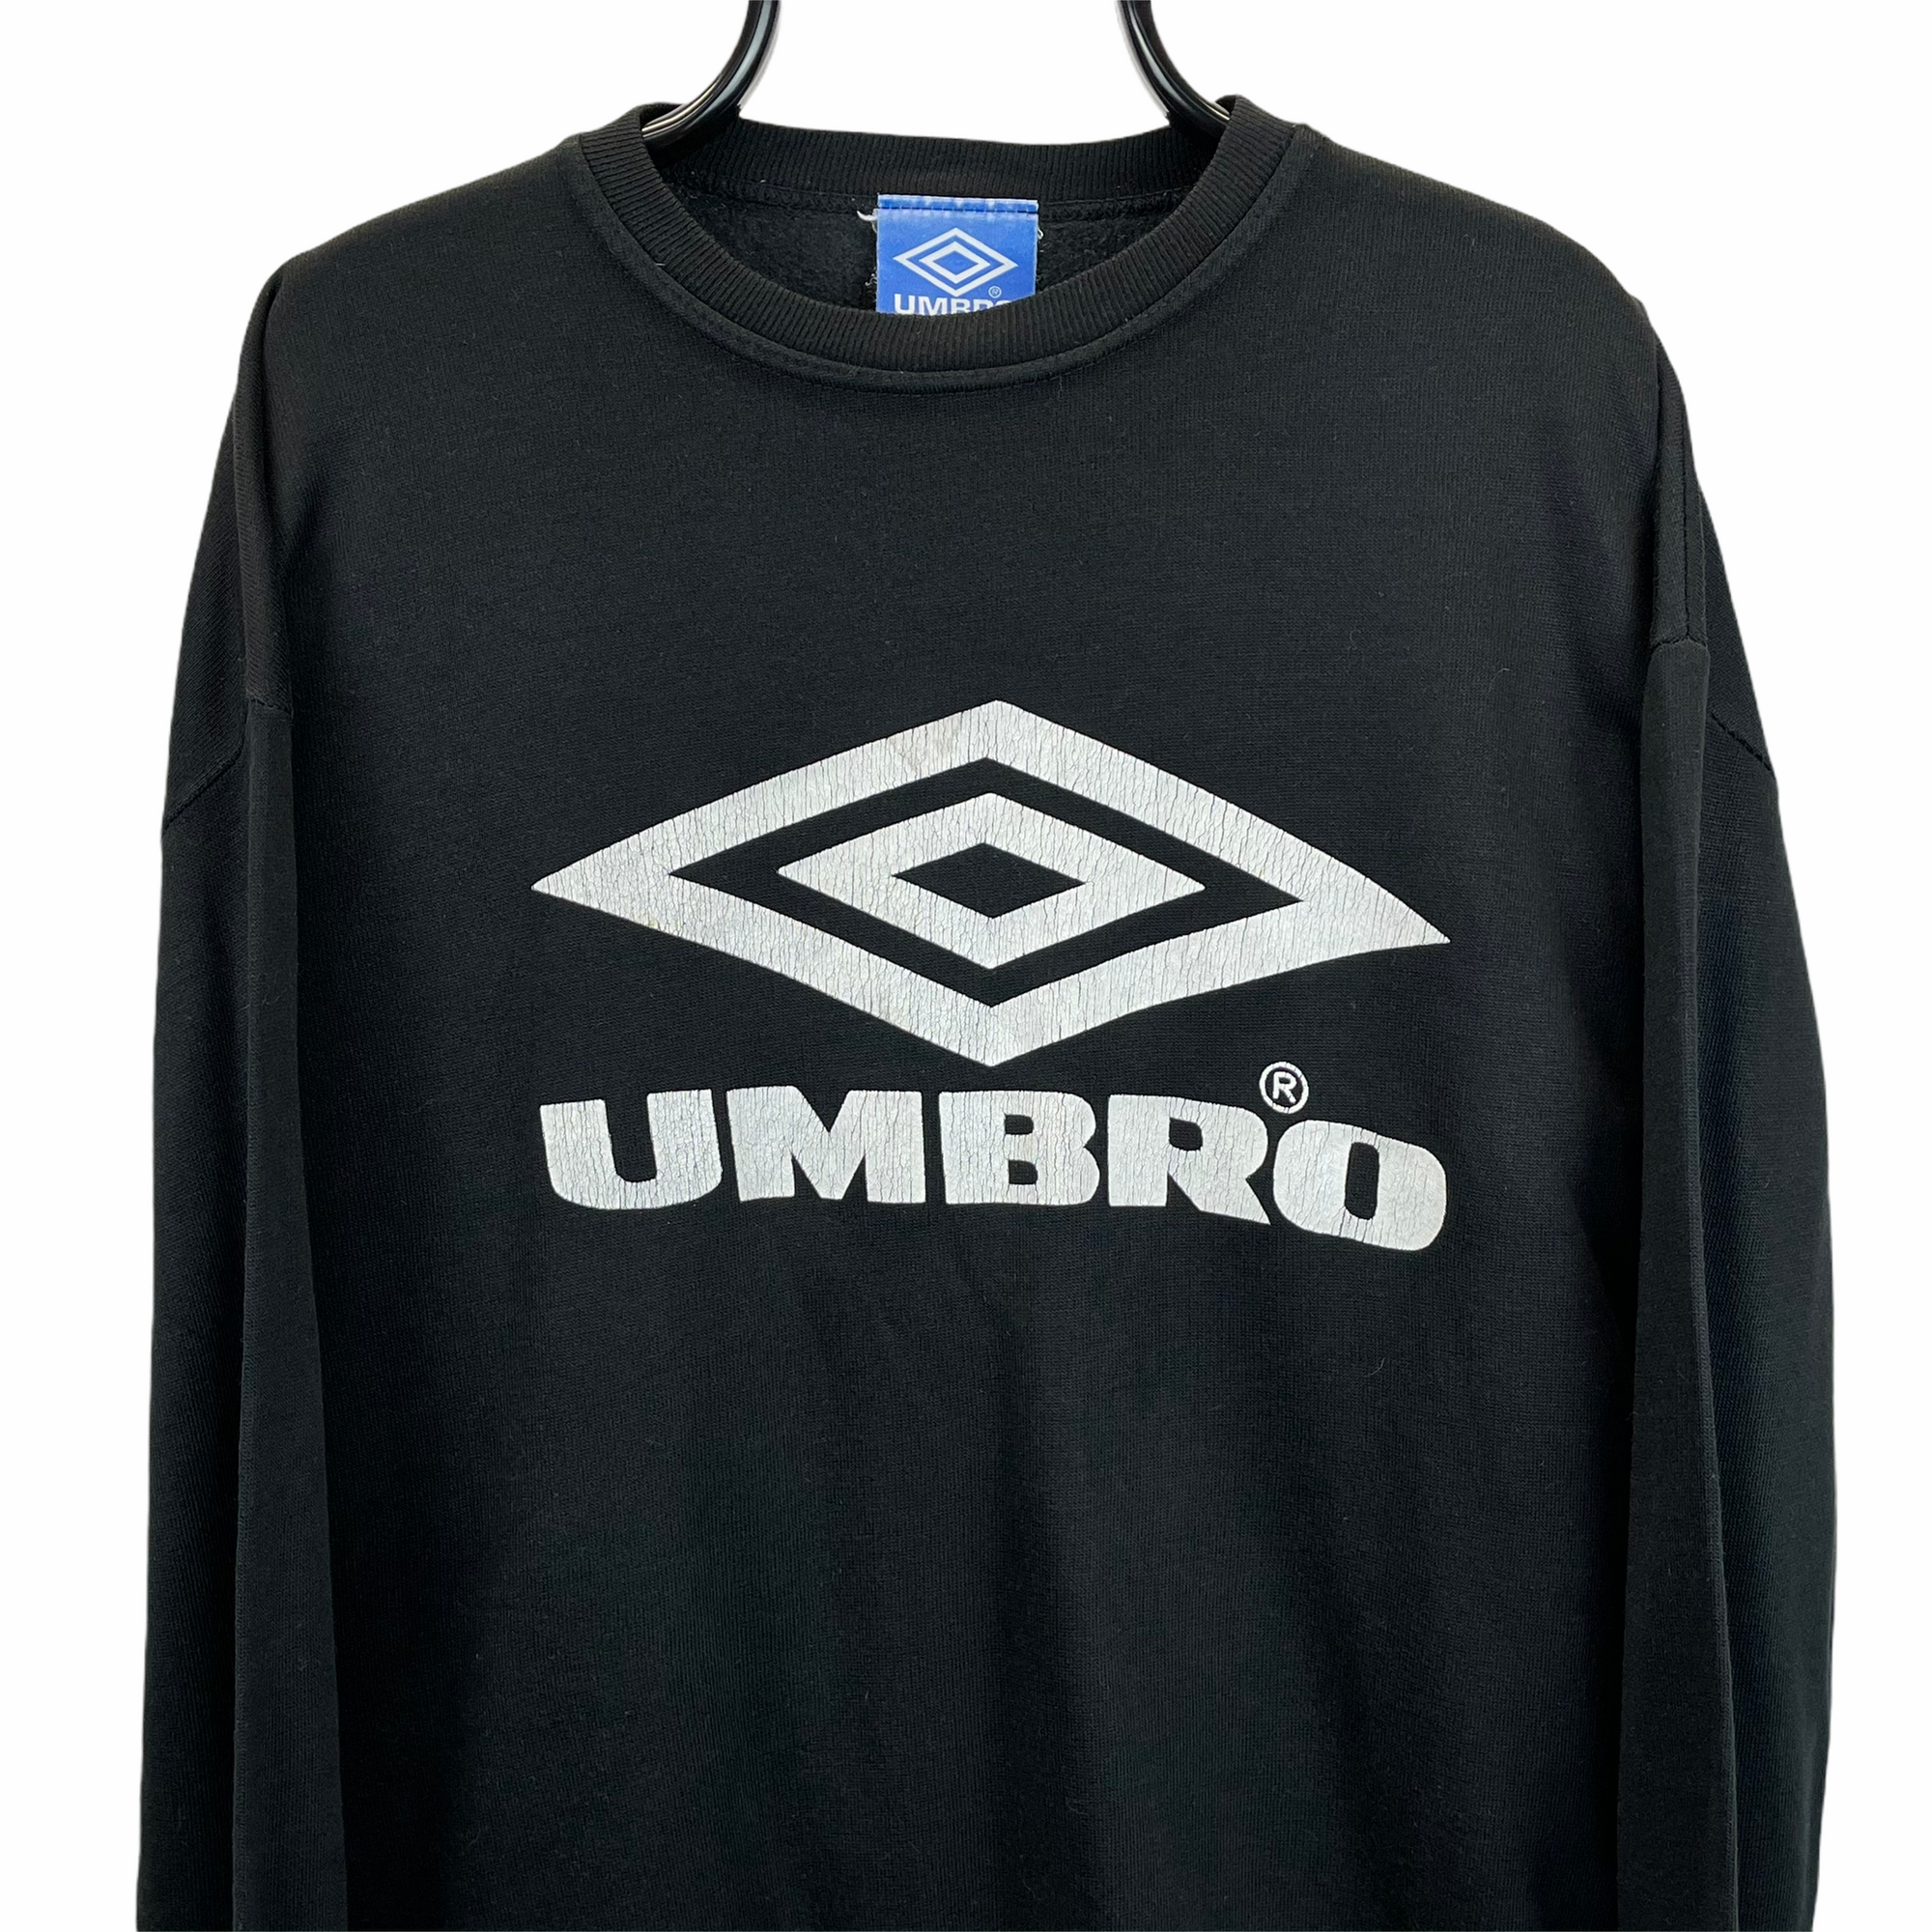 Vintage 90s Umbro Sweatshirt in Black & White - Men's Large/Women's XL